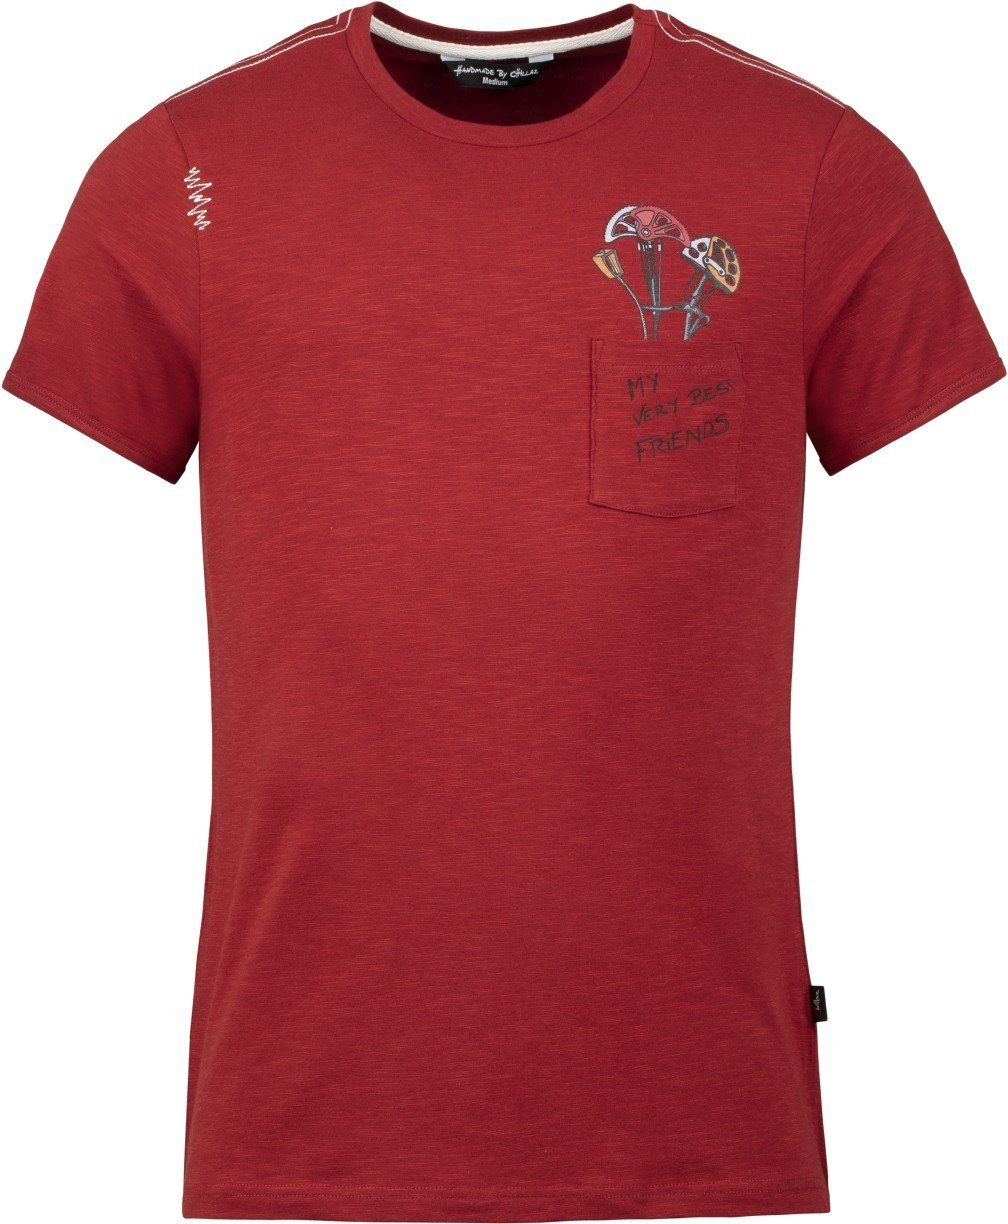 Chillaz T-Shirt Pocket Friends T-Shirt dark red